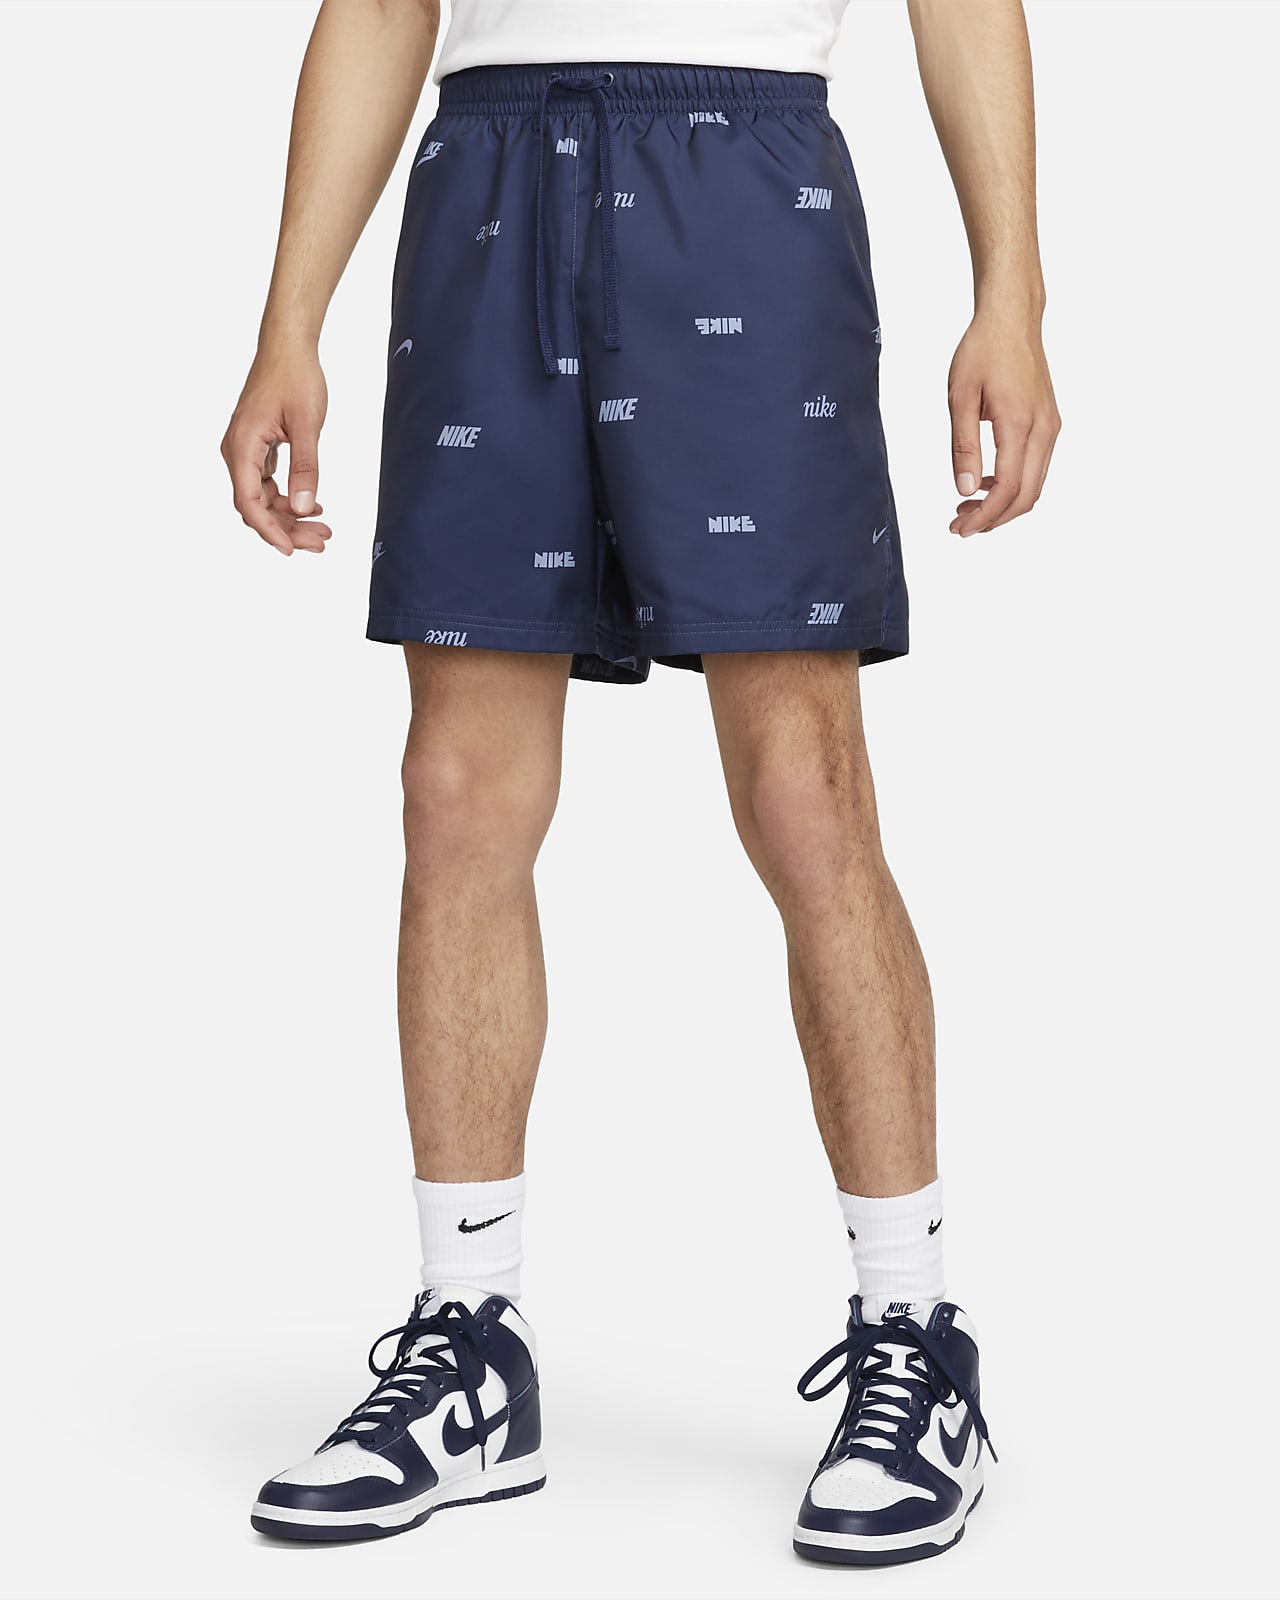 Nike flow woven shorts